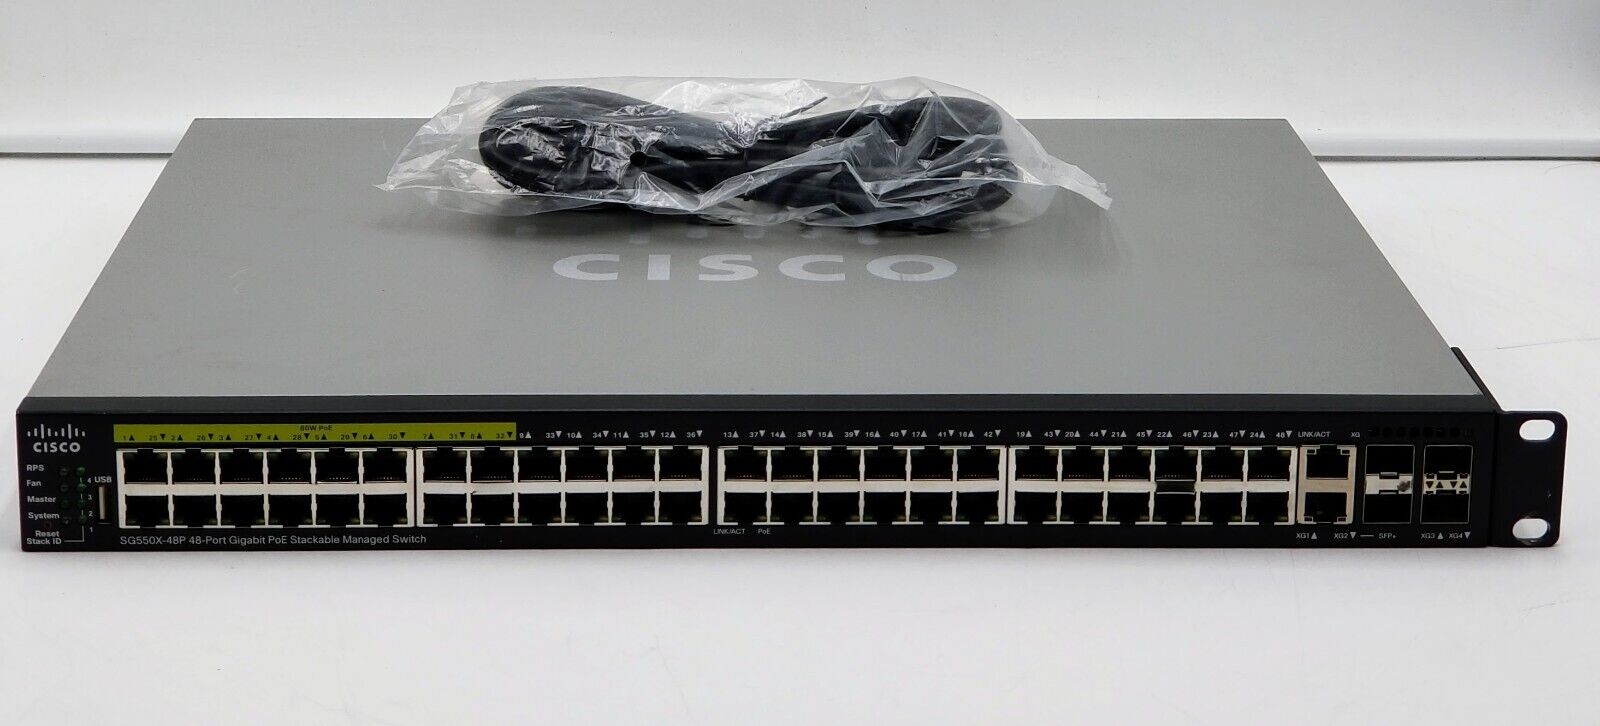 Clean Cisco SG550X-48MP 48-Port Gigabit PoE Stackable Managed Switch